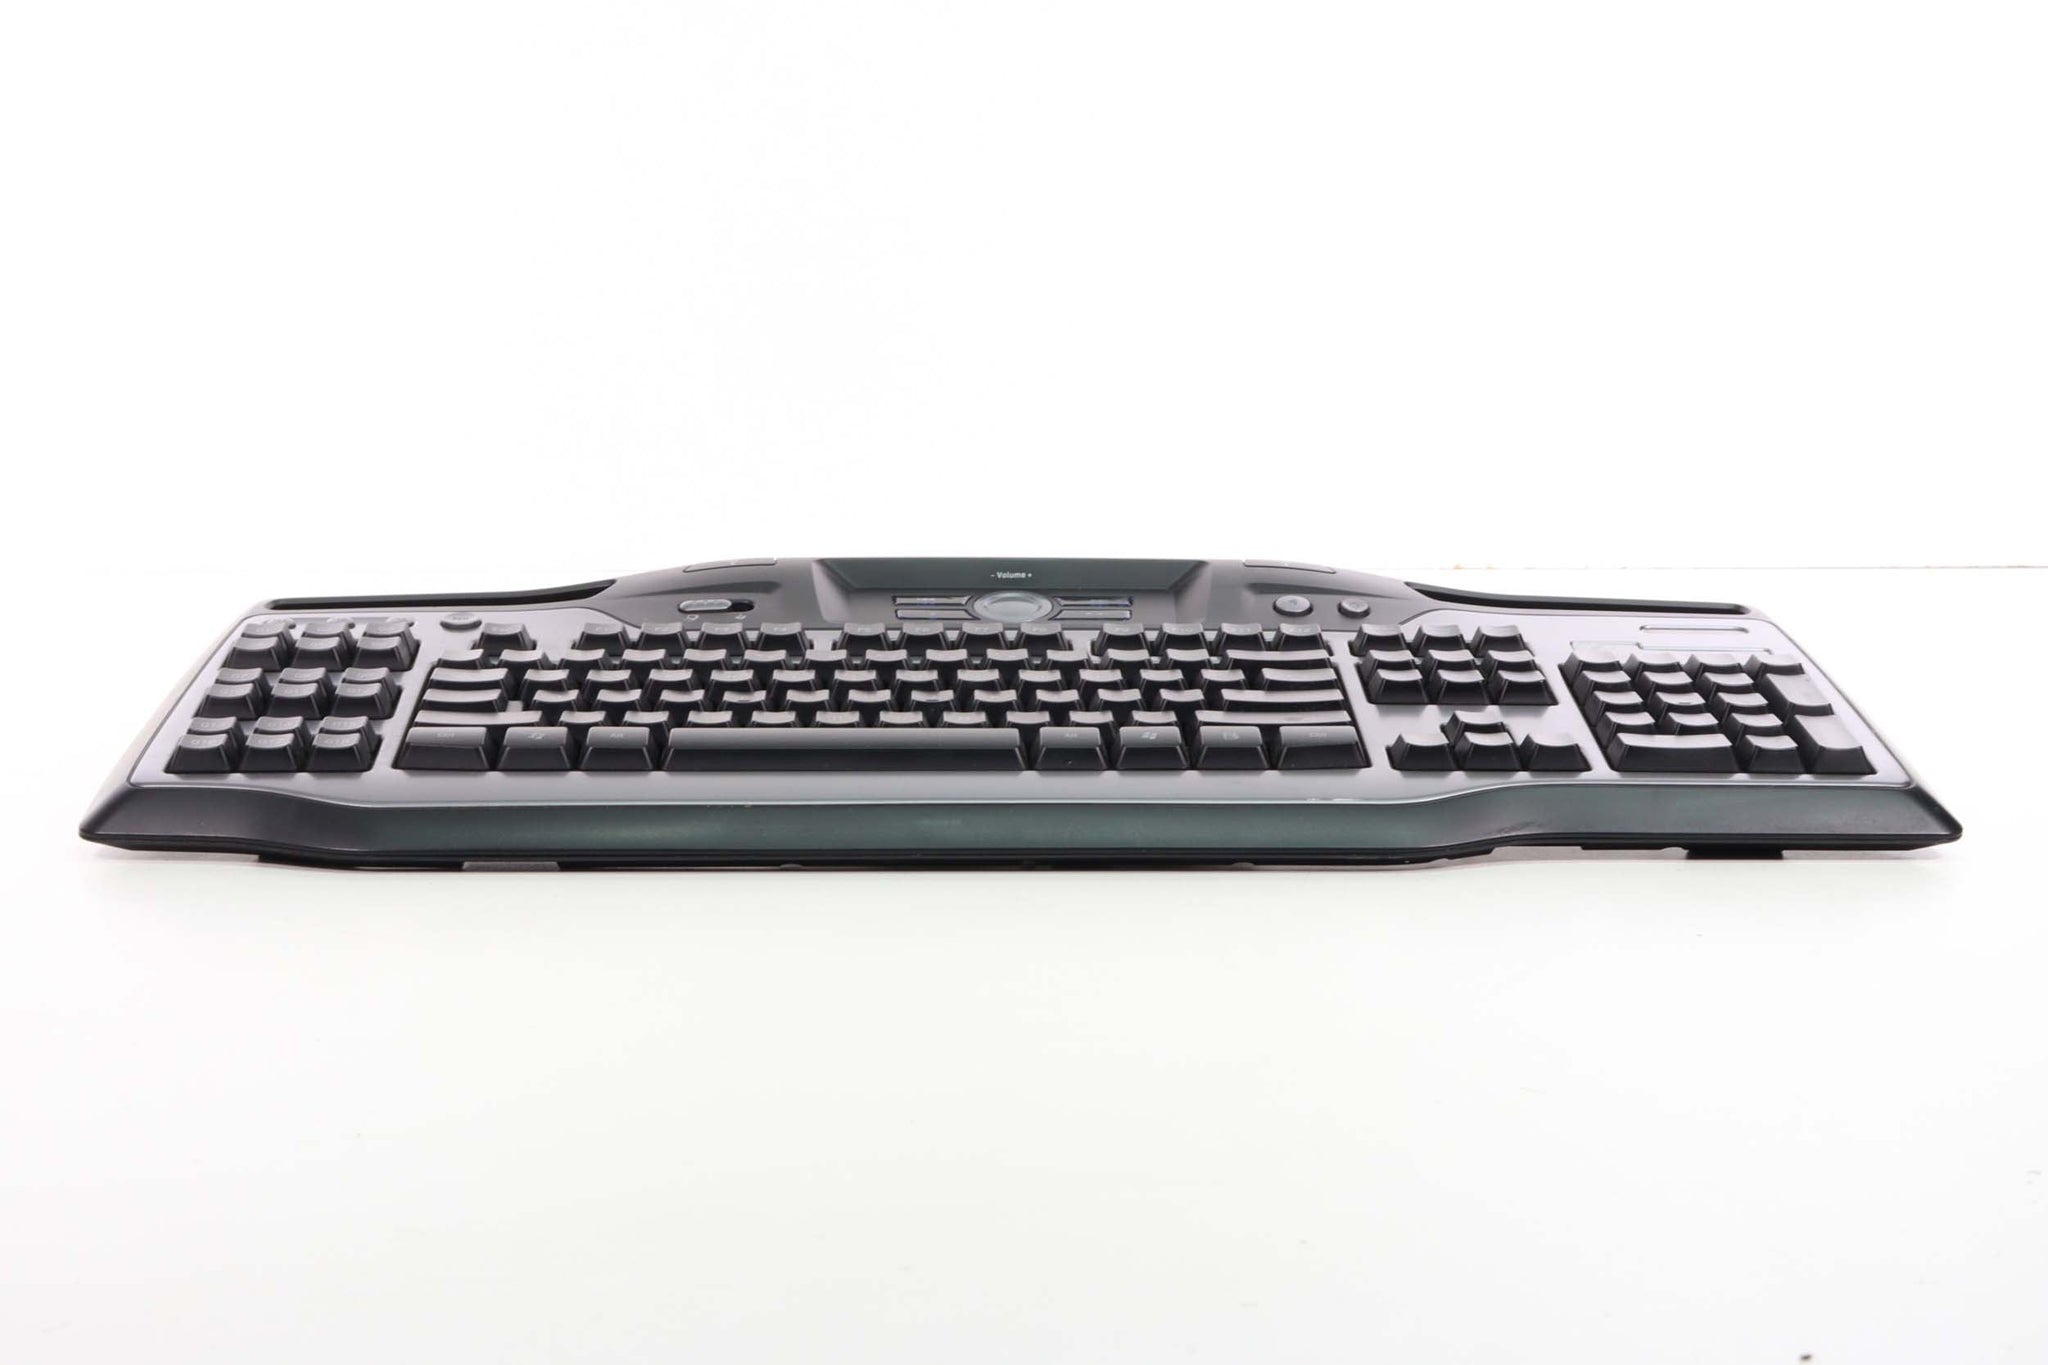 Logitech PC Gaming Keyboards in Computer Keyboards 